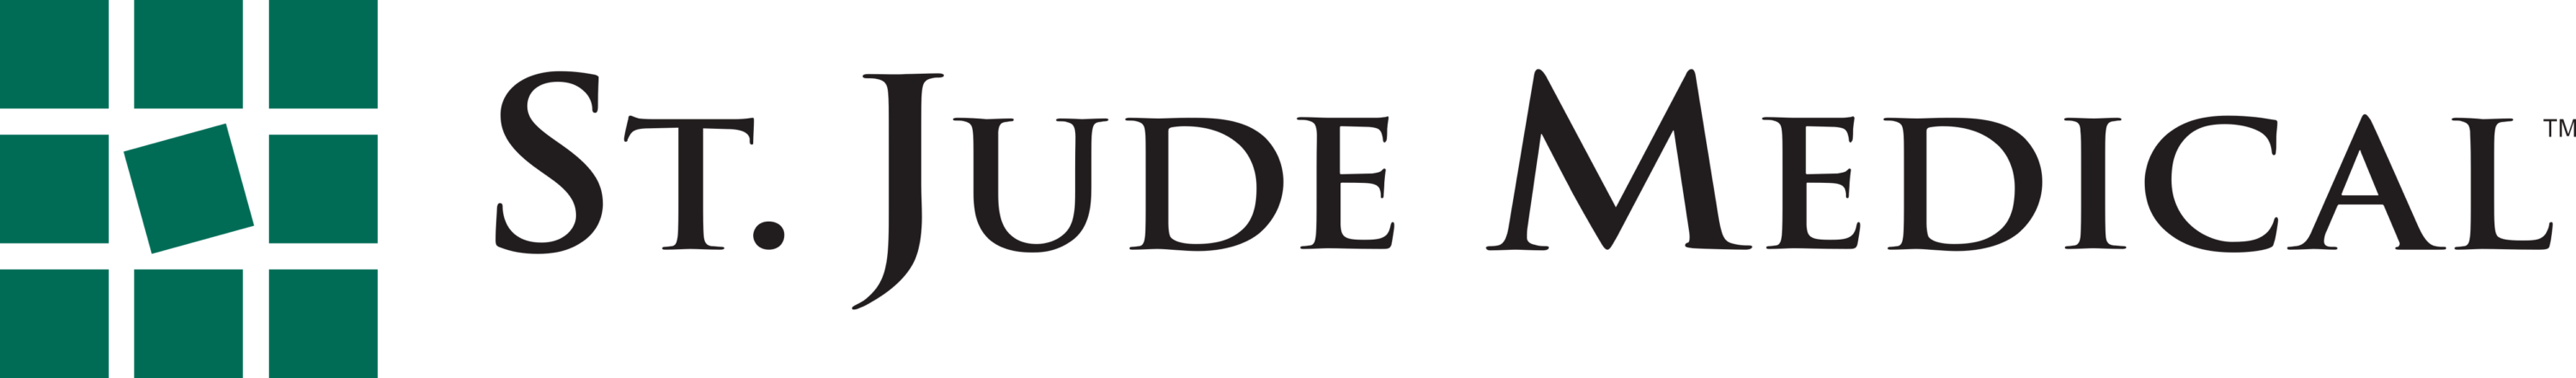 St.Jude Medical Logo